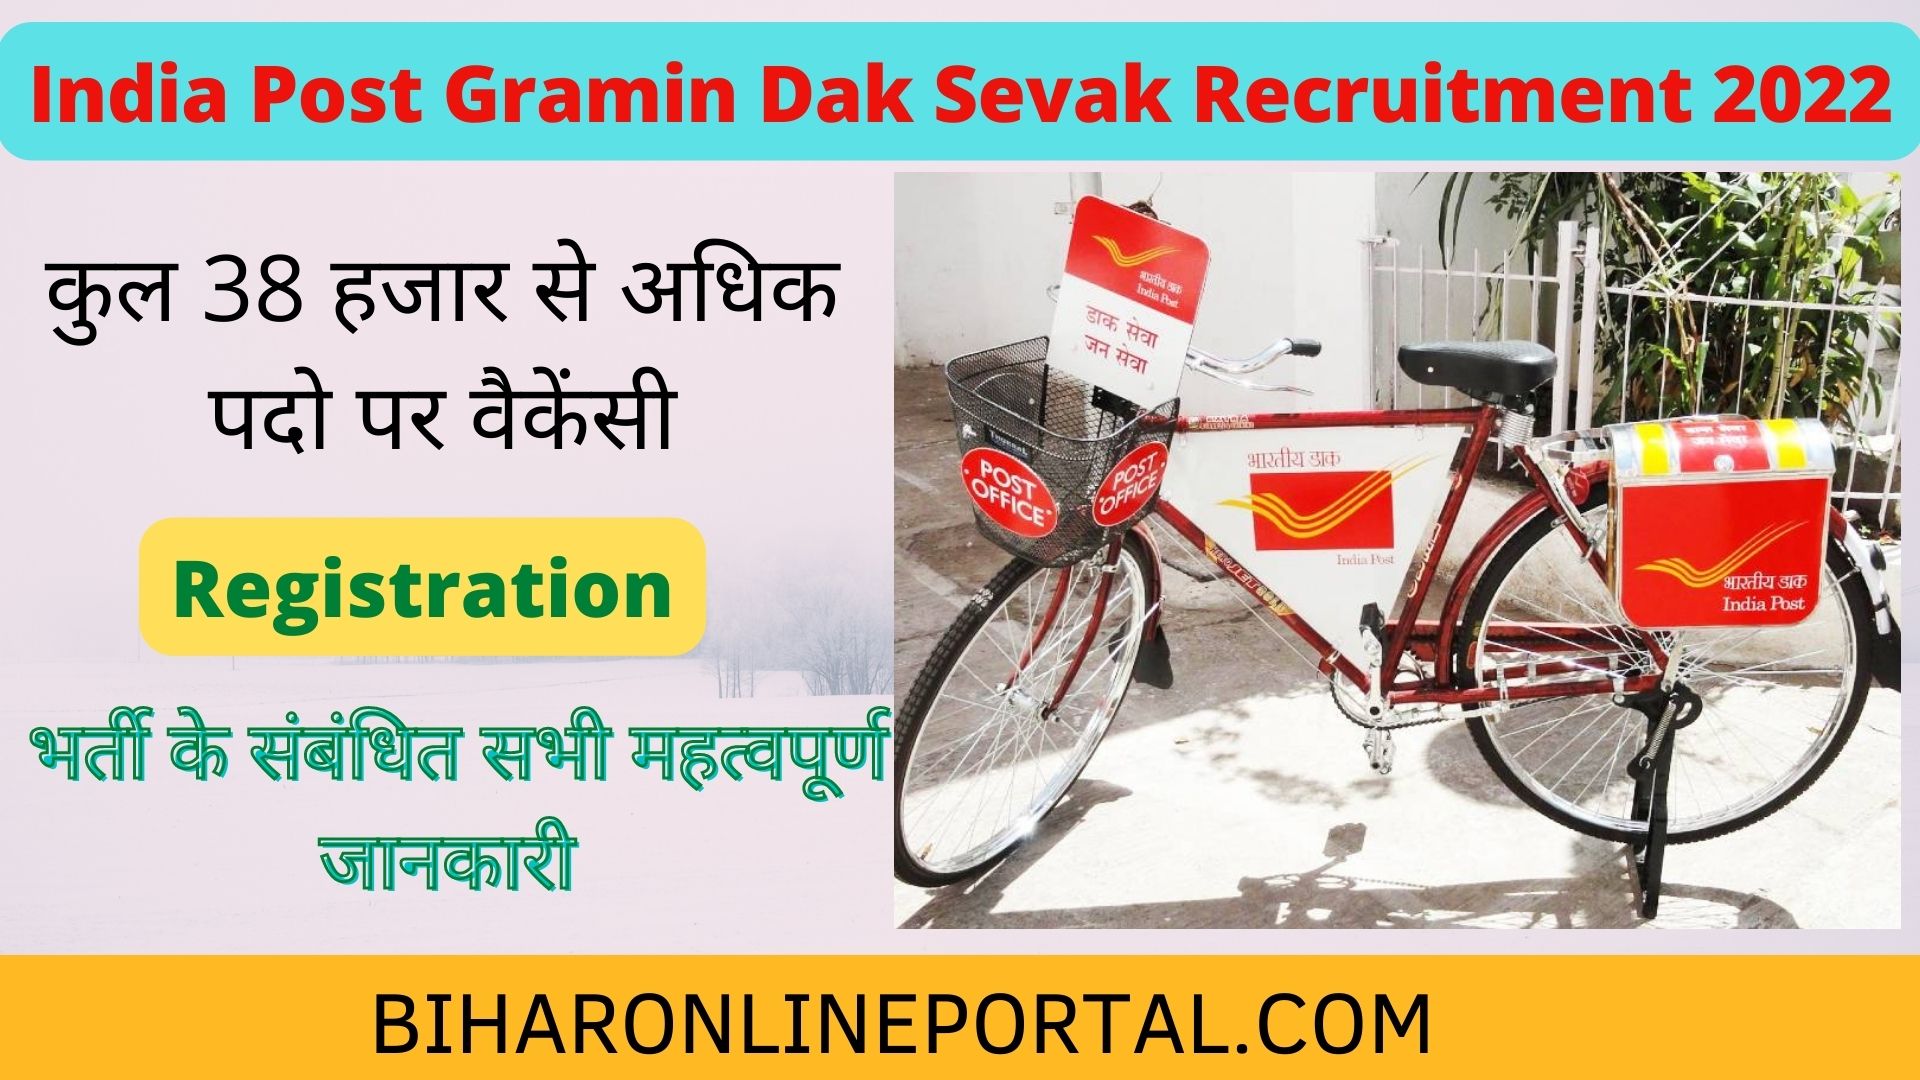 India Post Gramin Dak Sevak Recruitment 2022